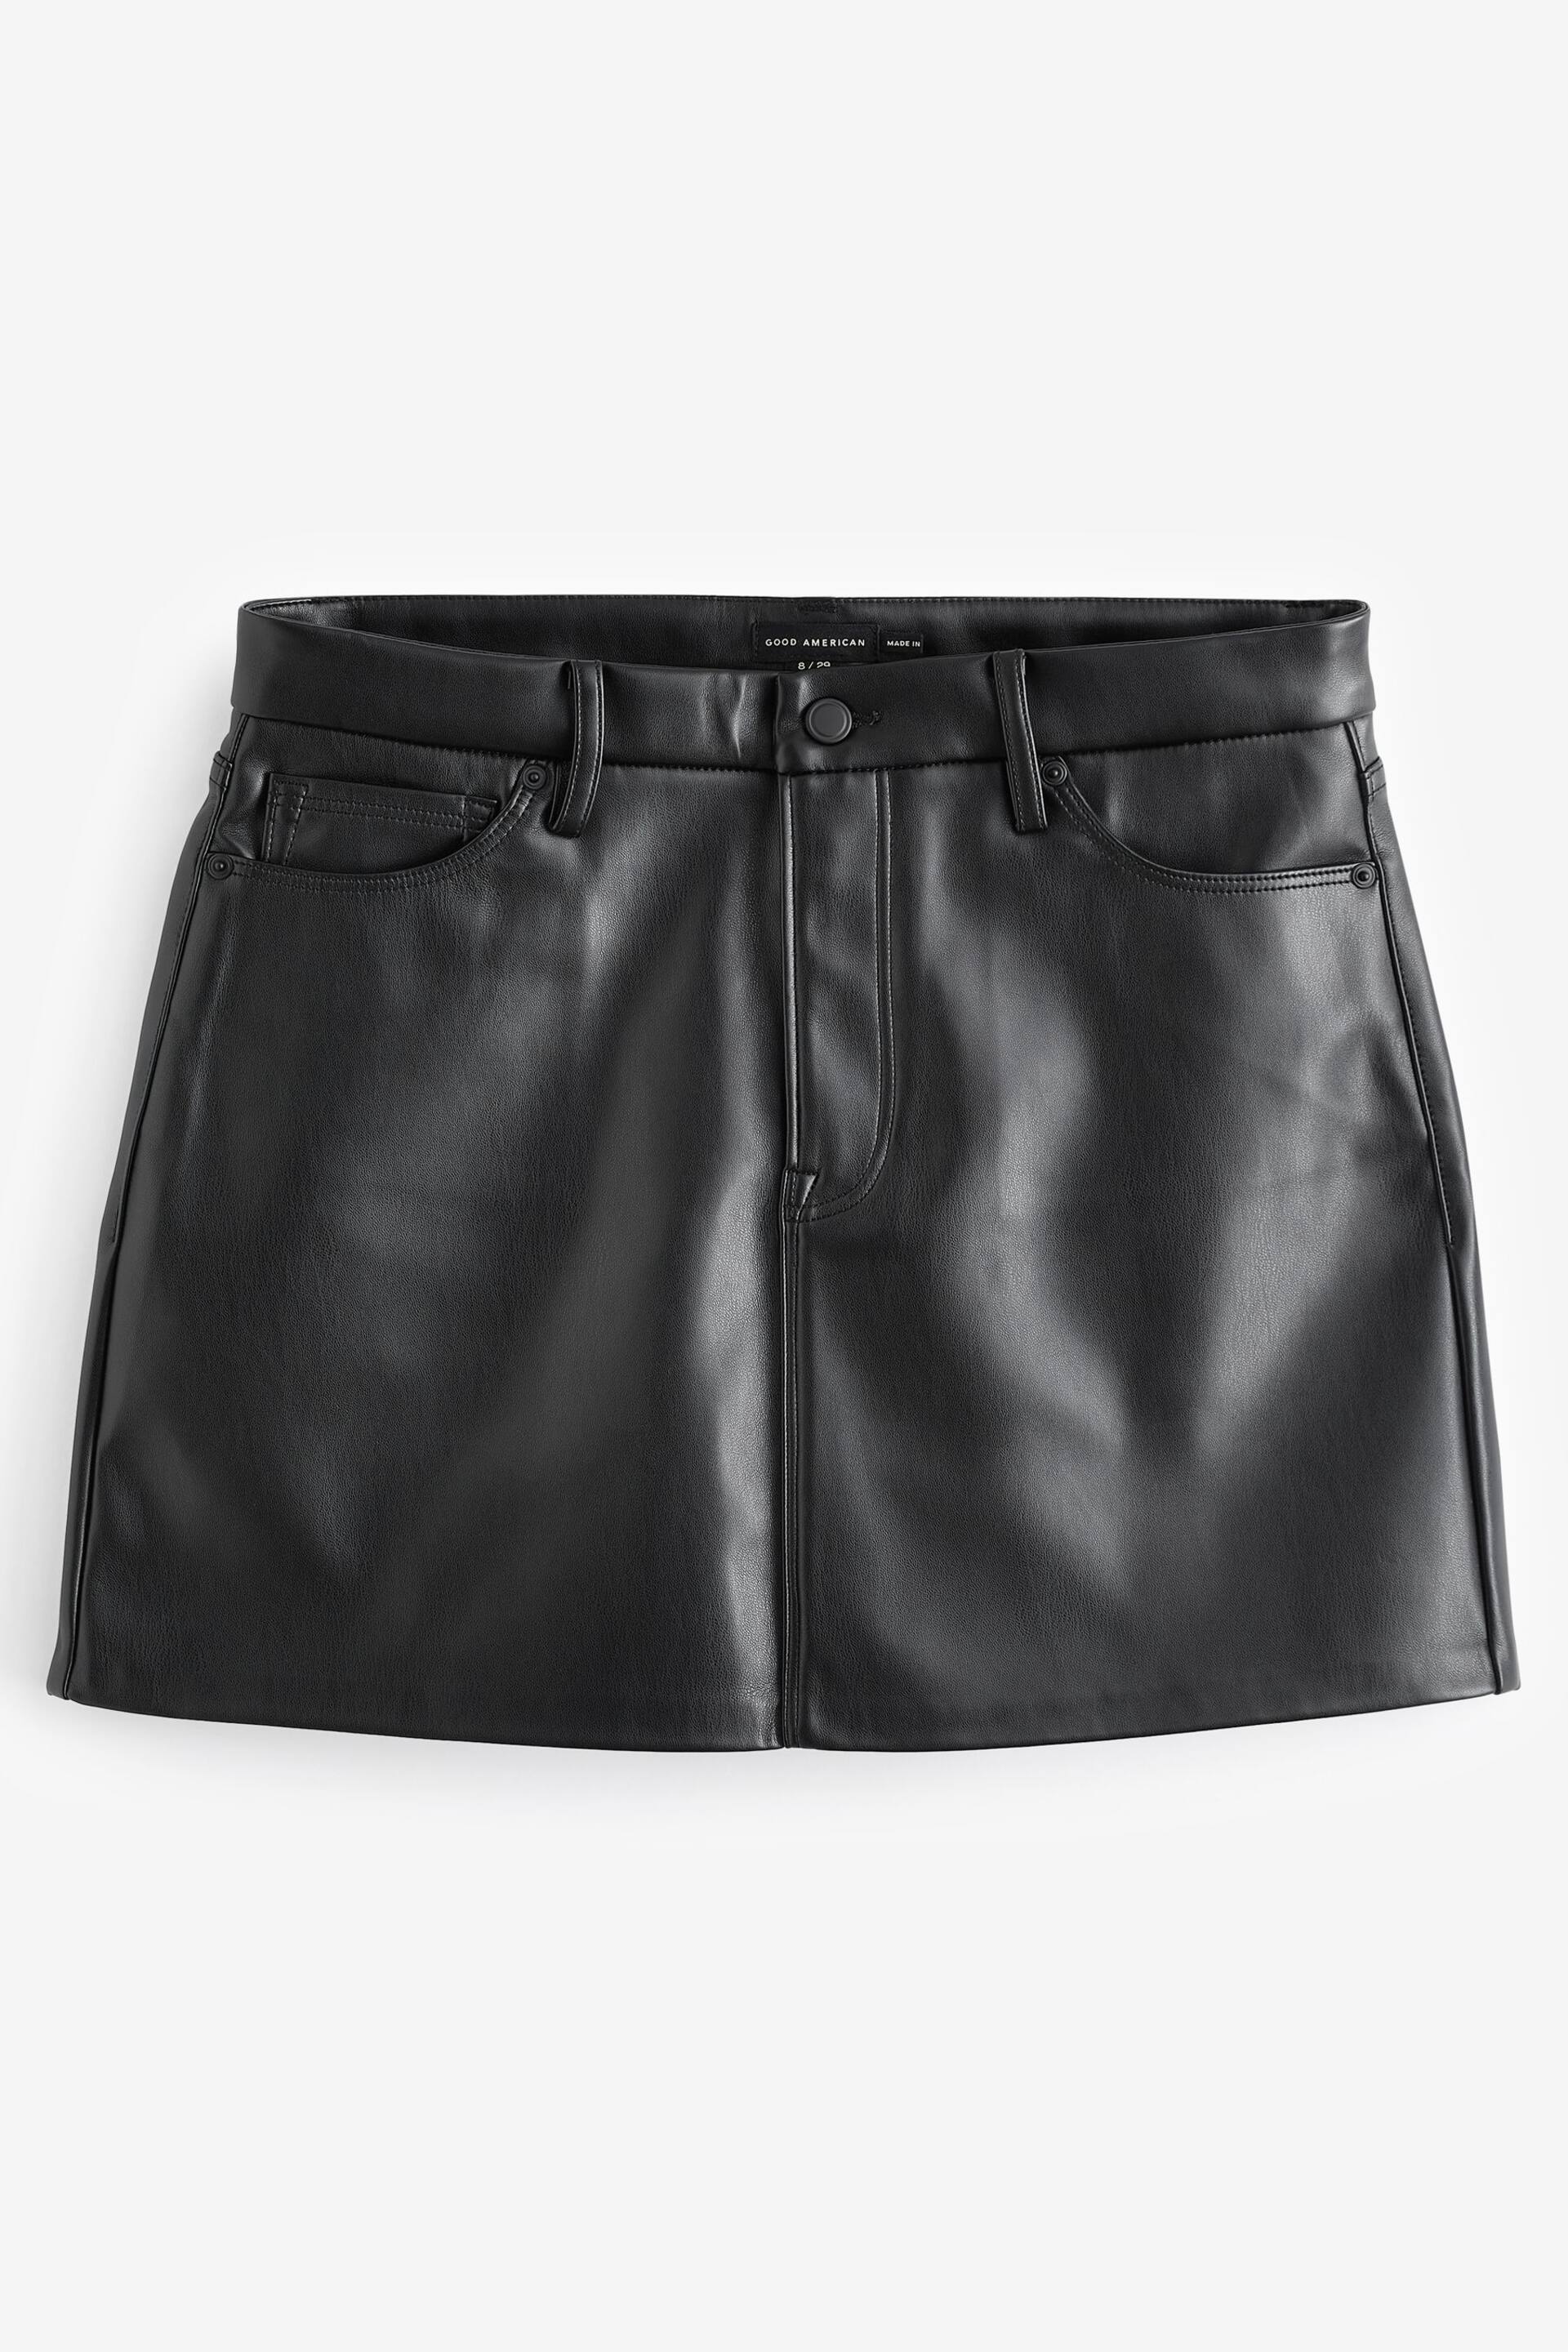 Good American Black Mini Skirt - Image 5 of 5